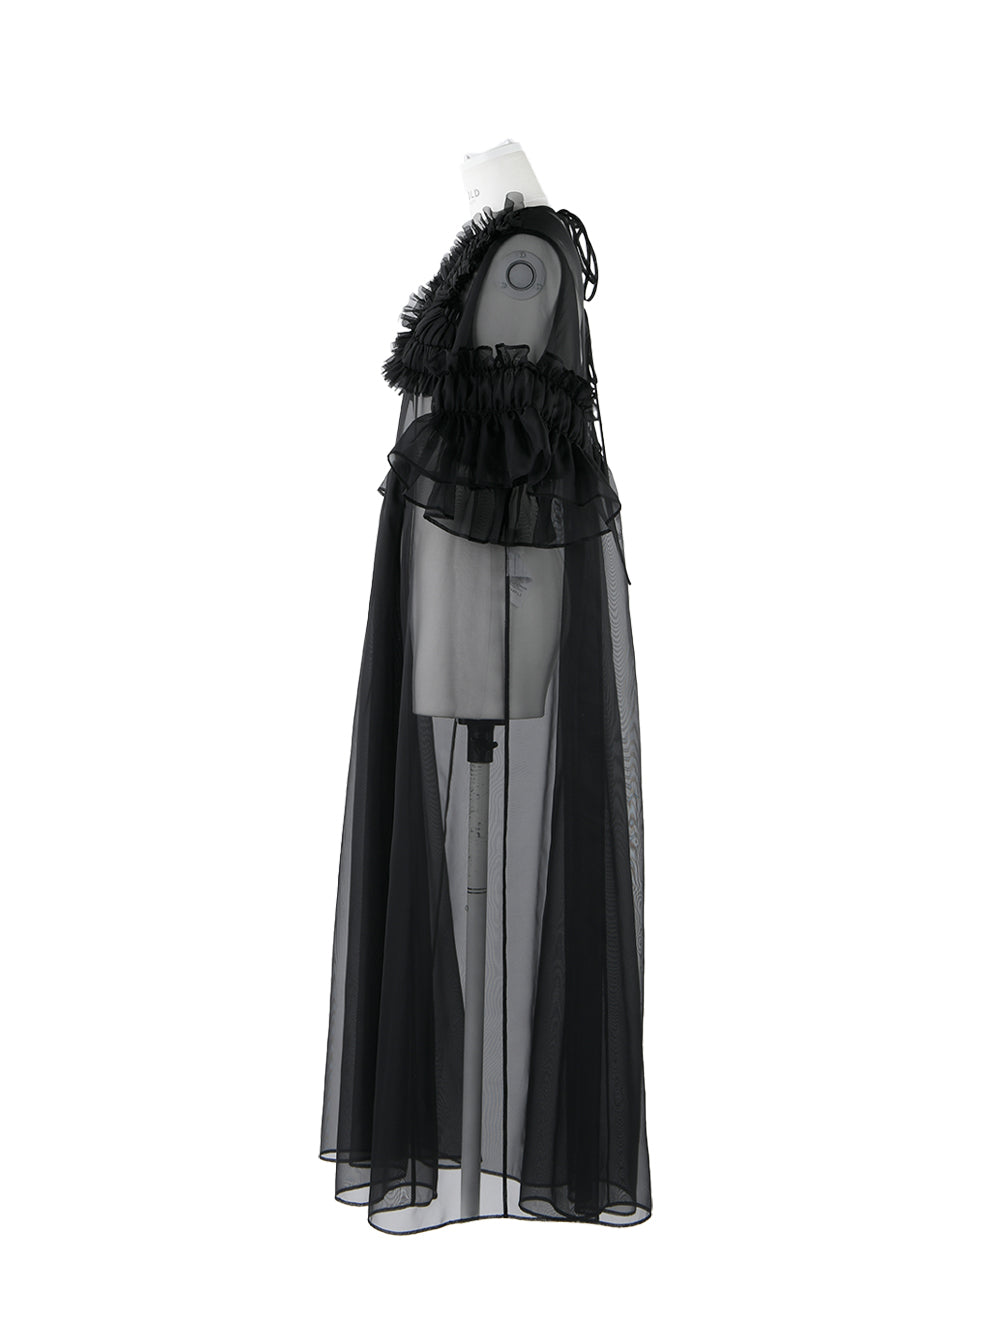 Melty Organdy Decorative Dress (Black)